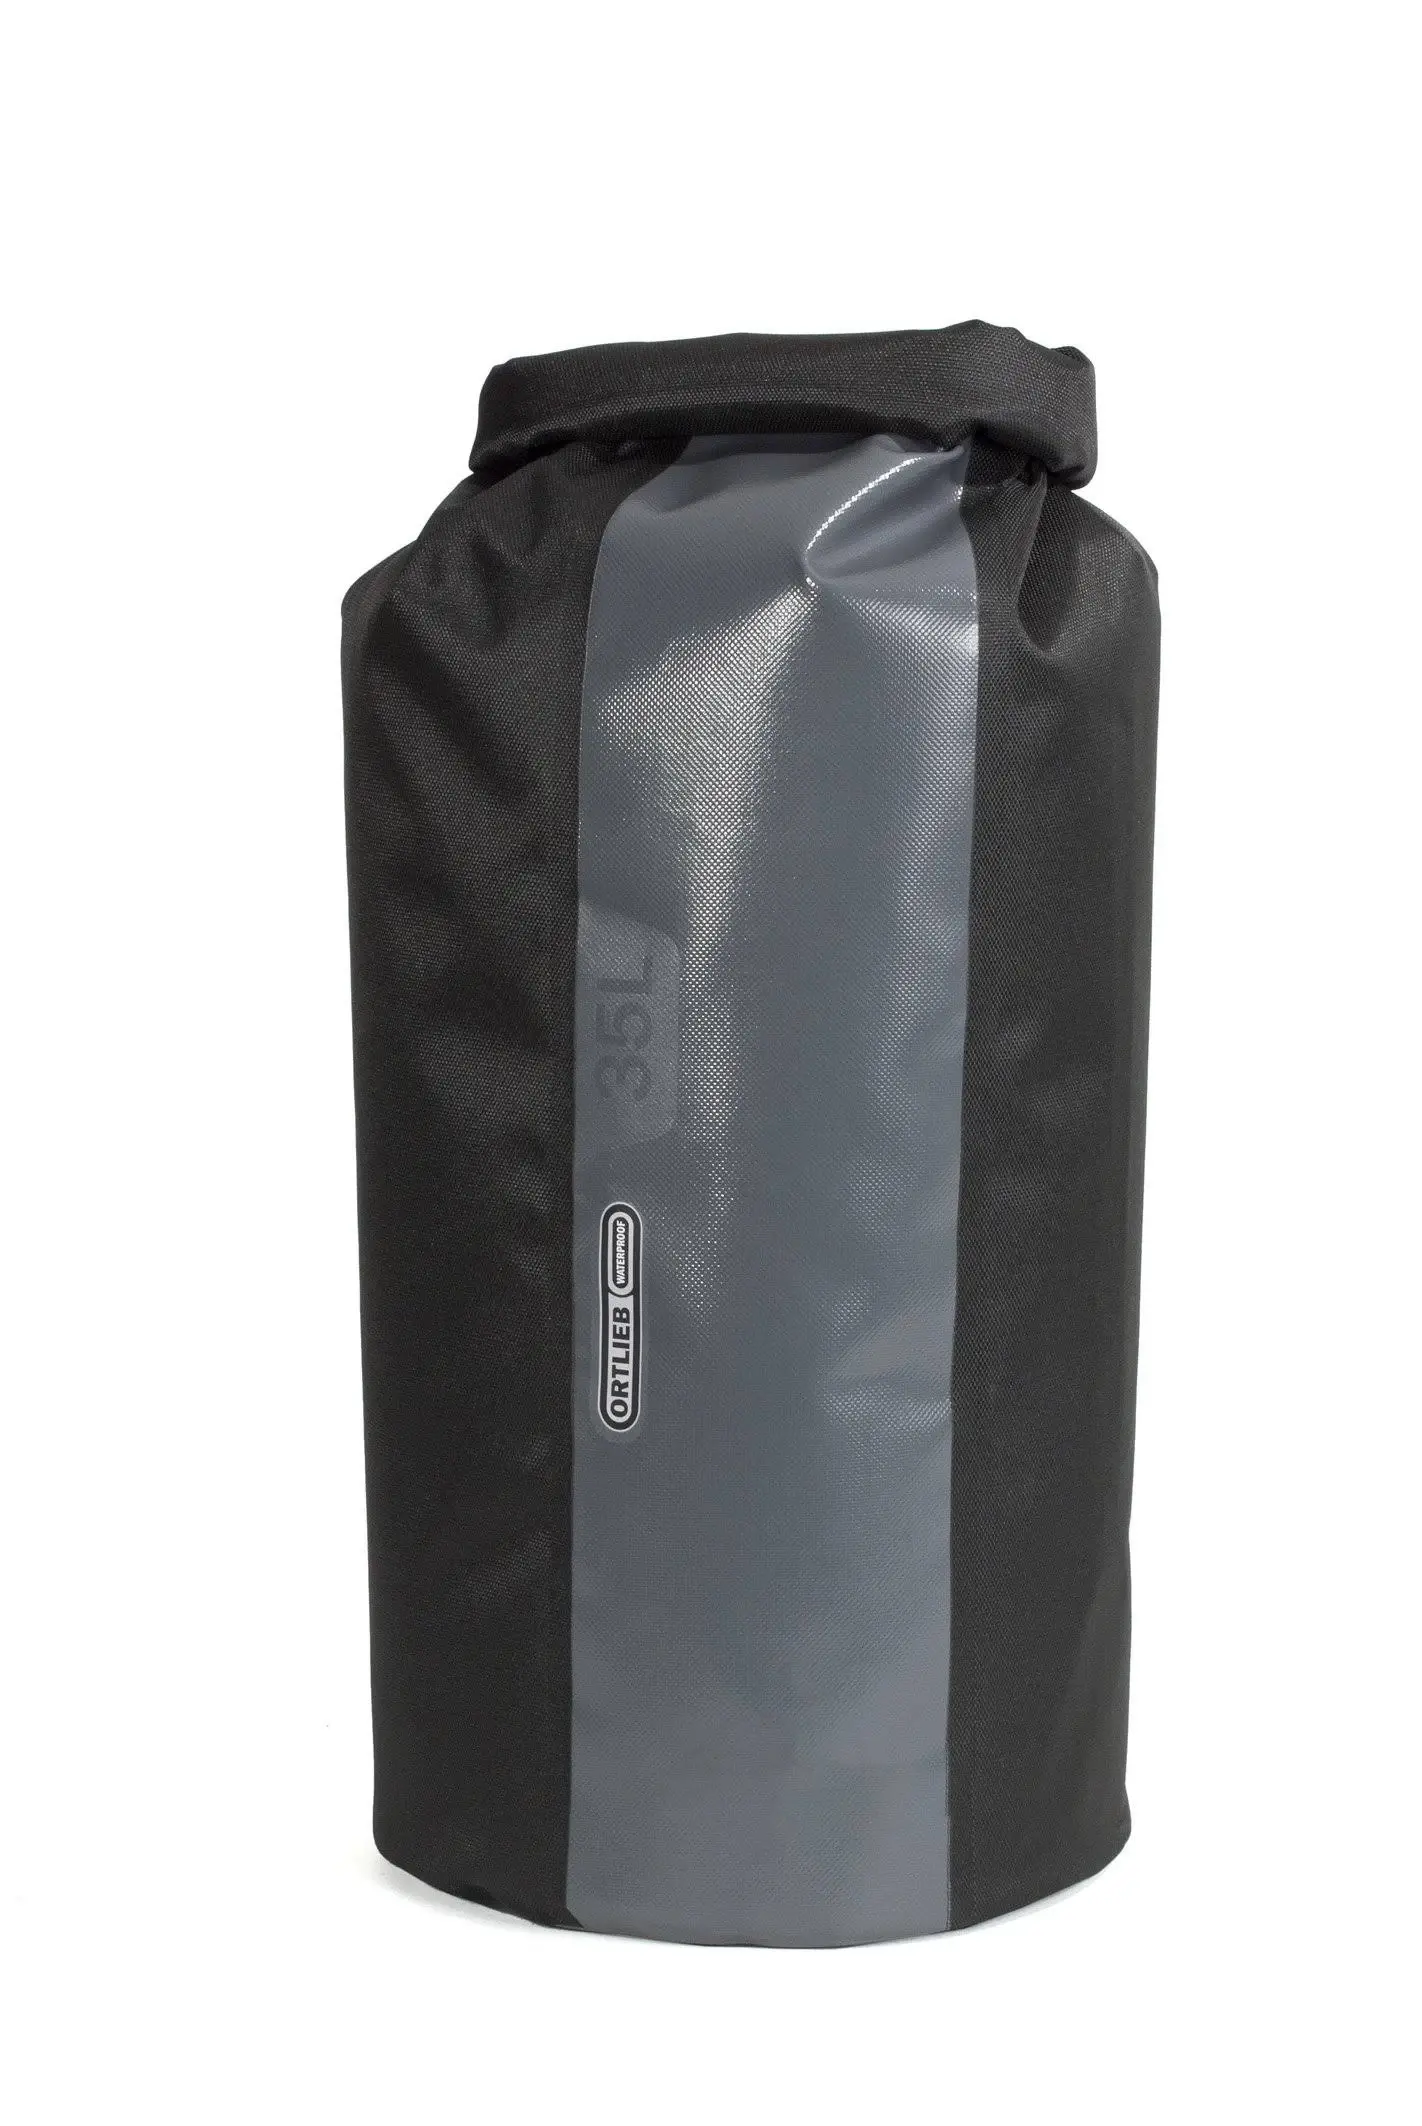 Ortlieb Dry-Bag PS490 Black-Grey 35L